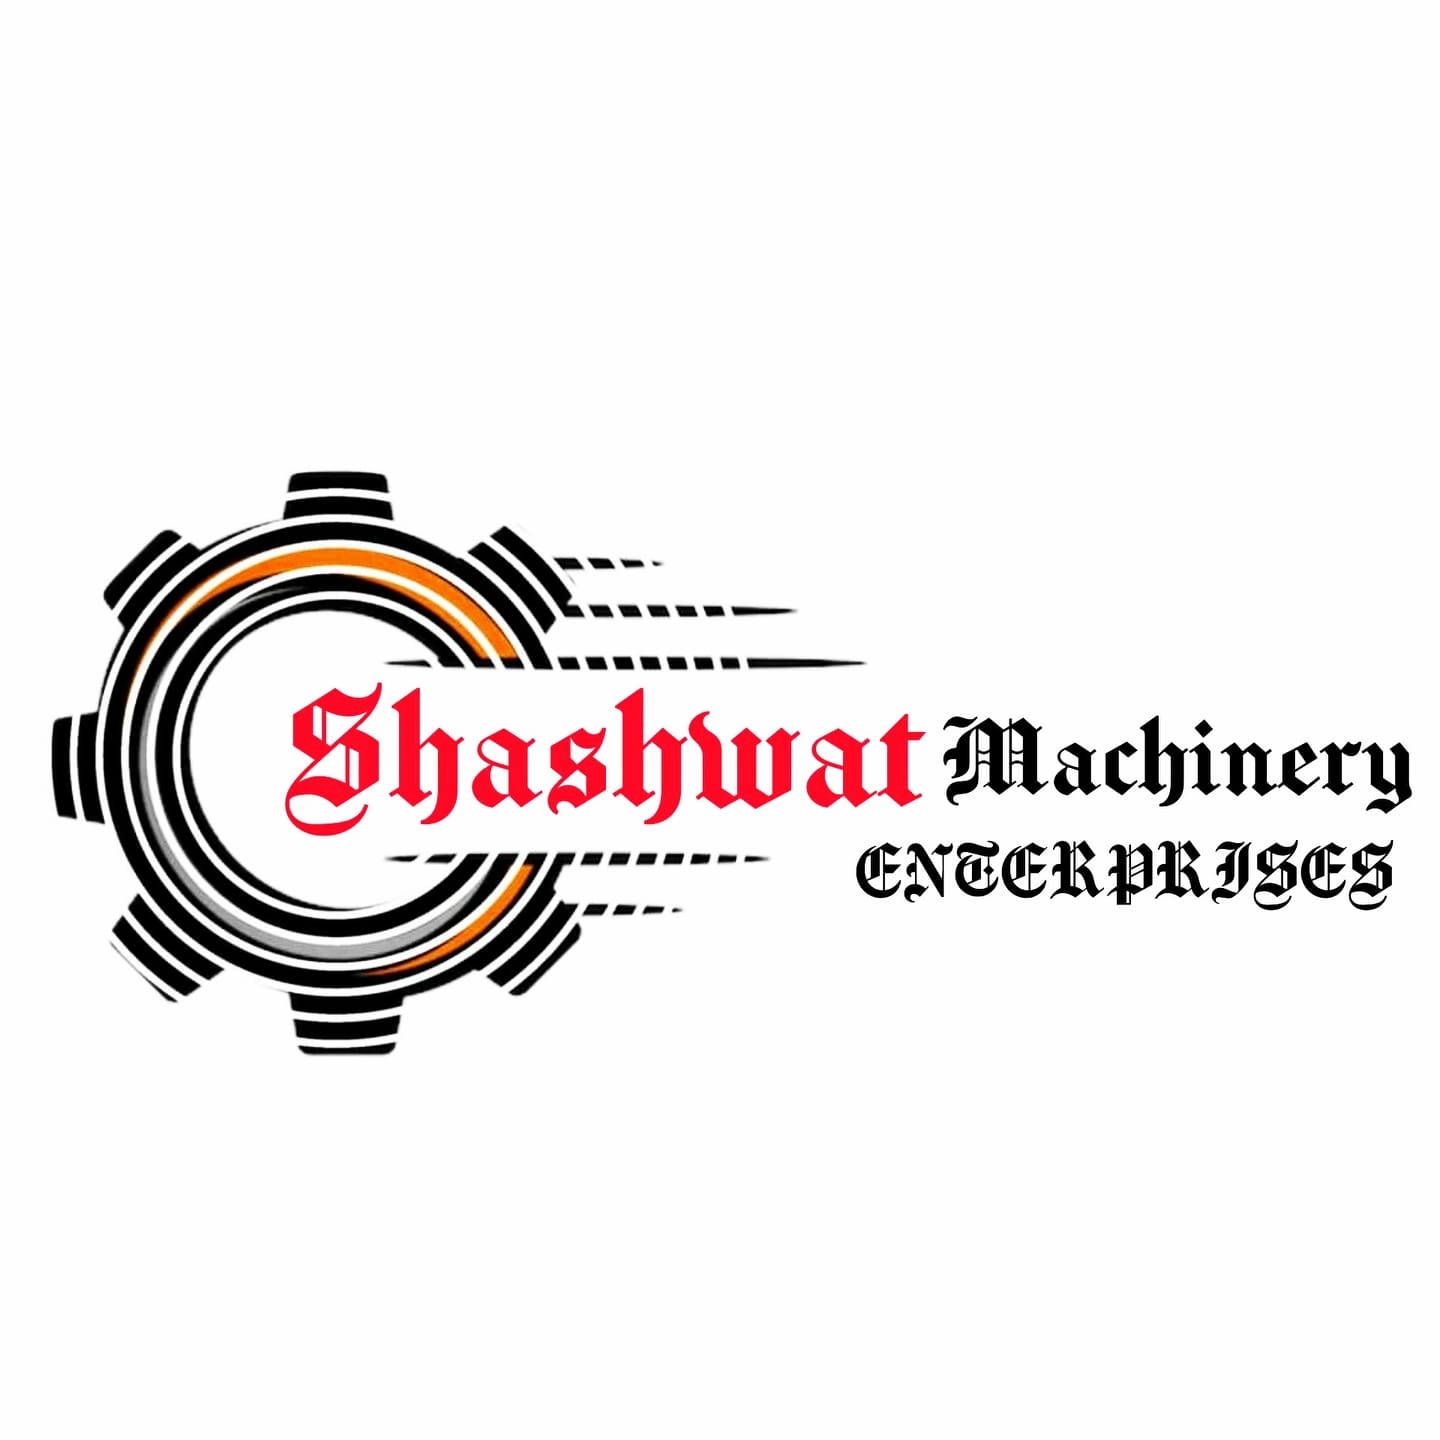 Shashwat Machinery Enterprise